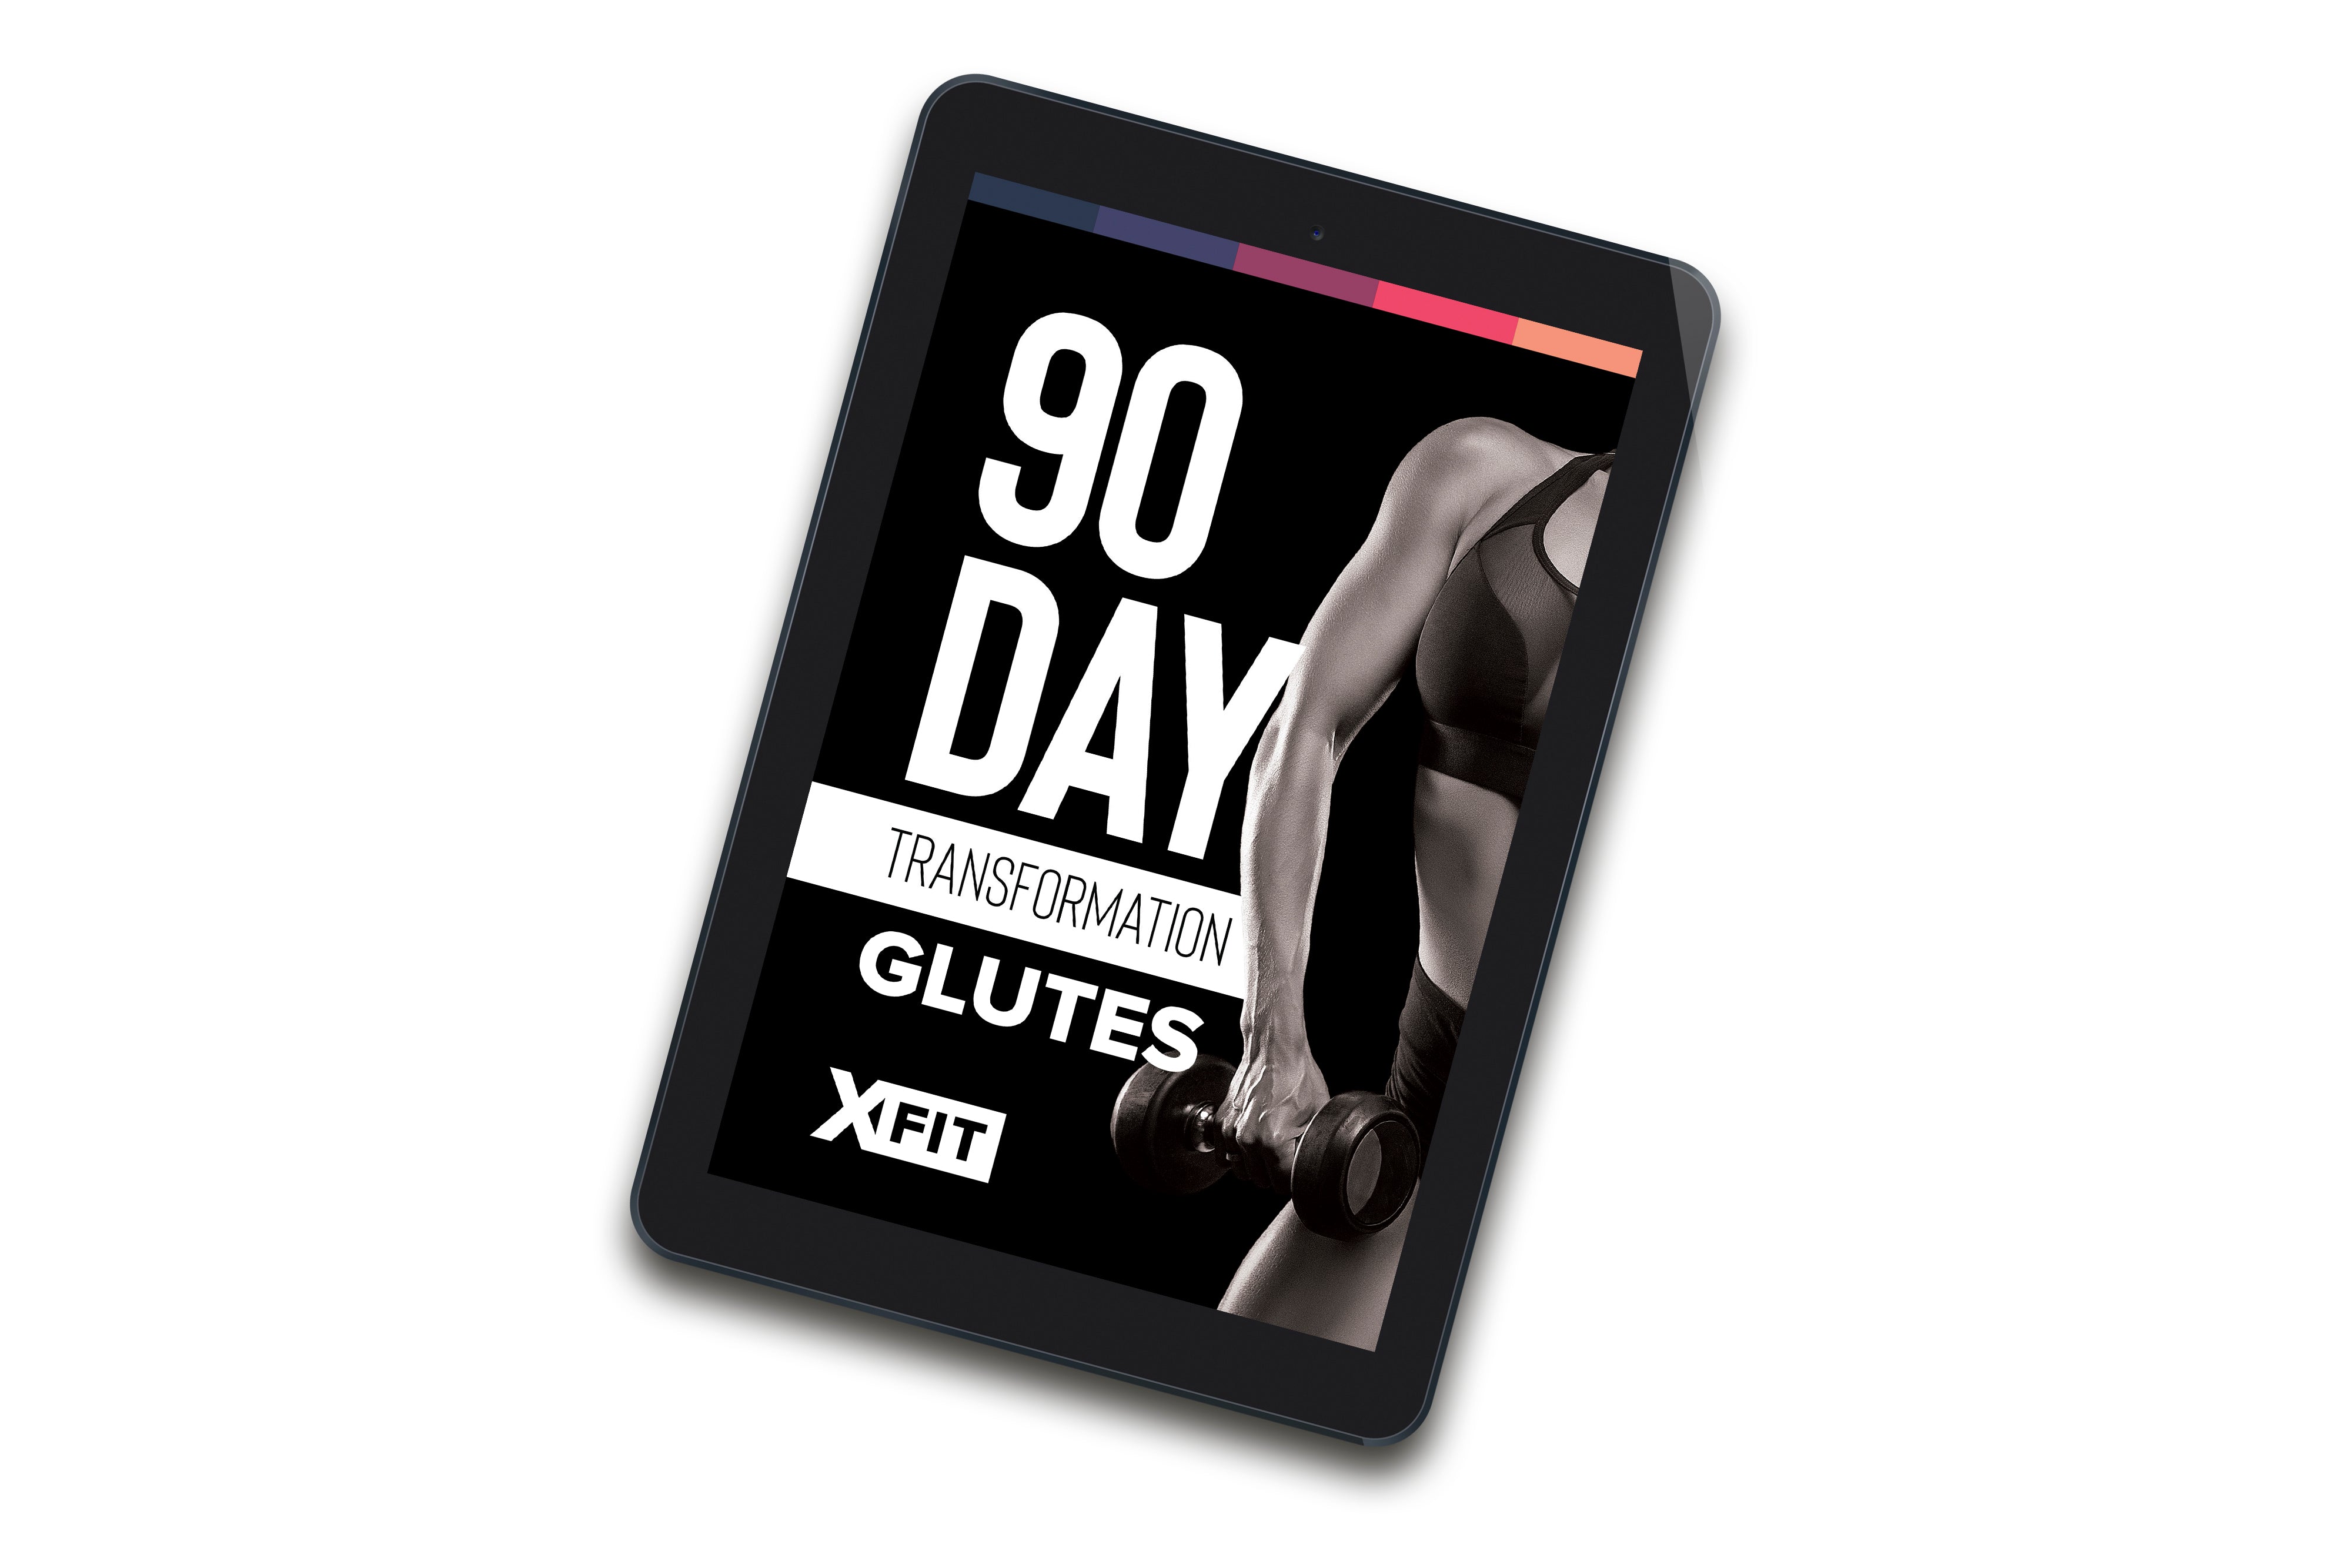 90 Day Transformation - Glutes